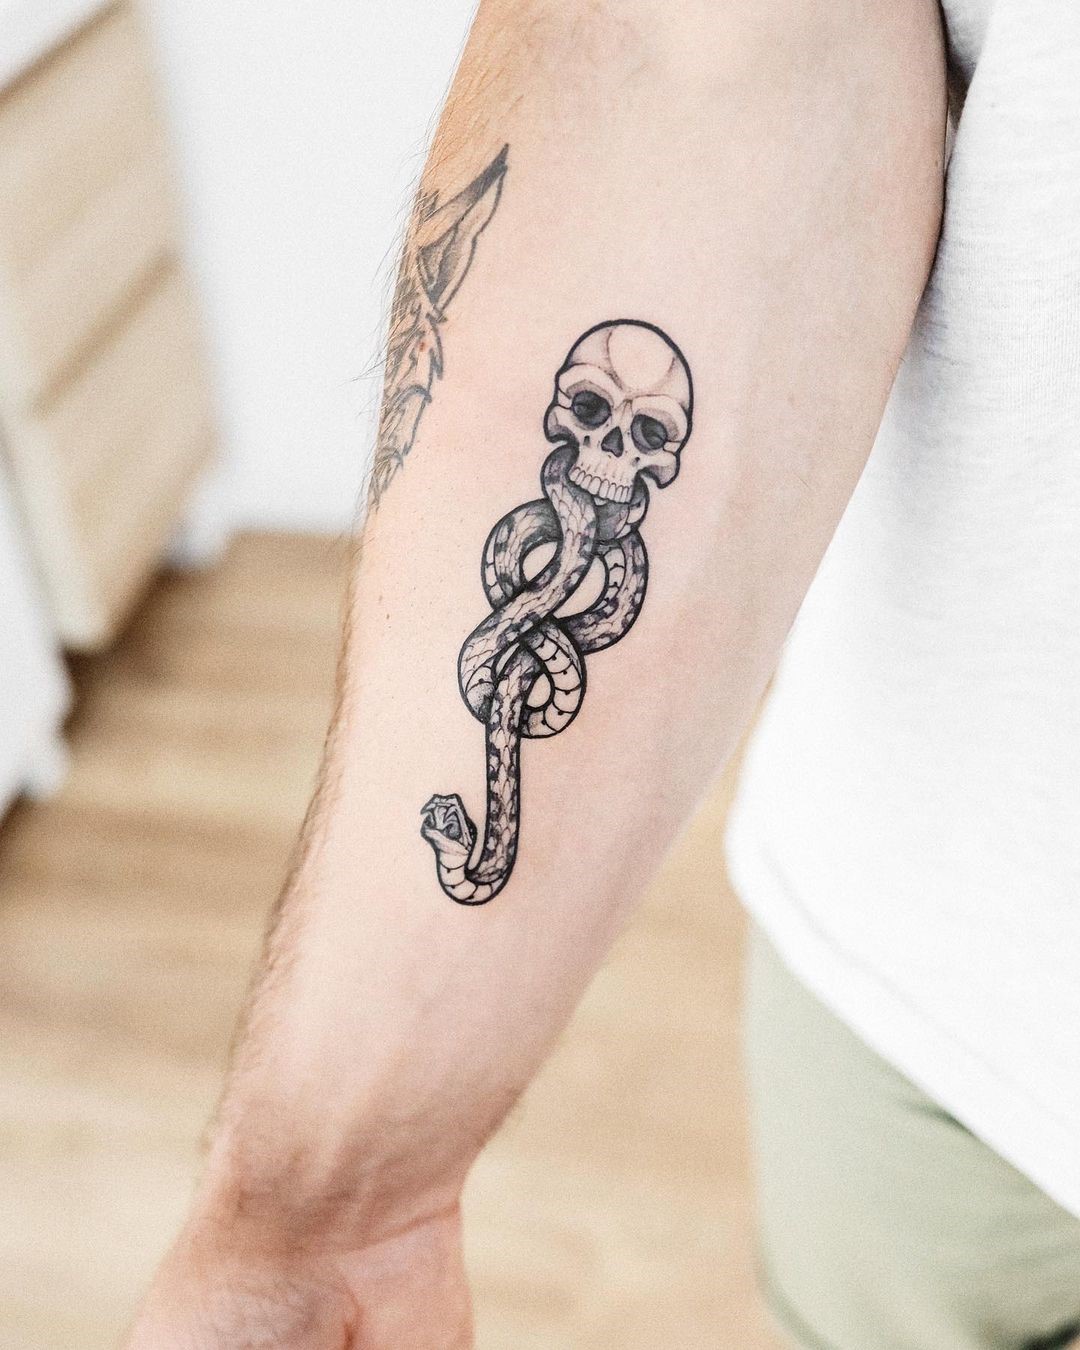 Death eater tattoo design